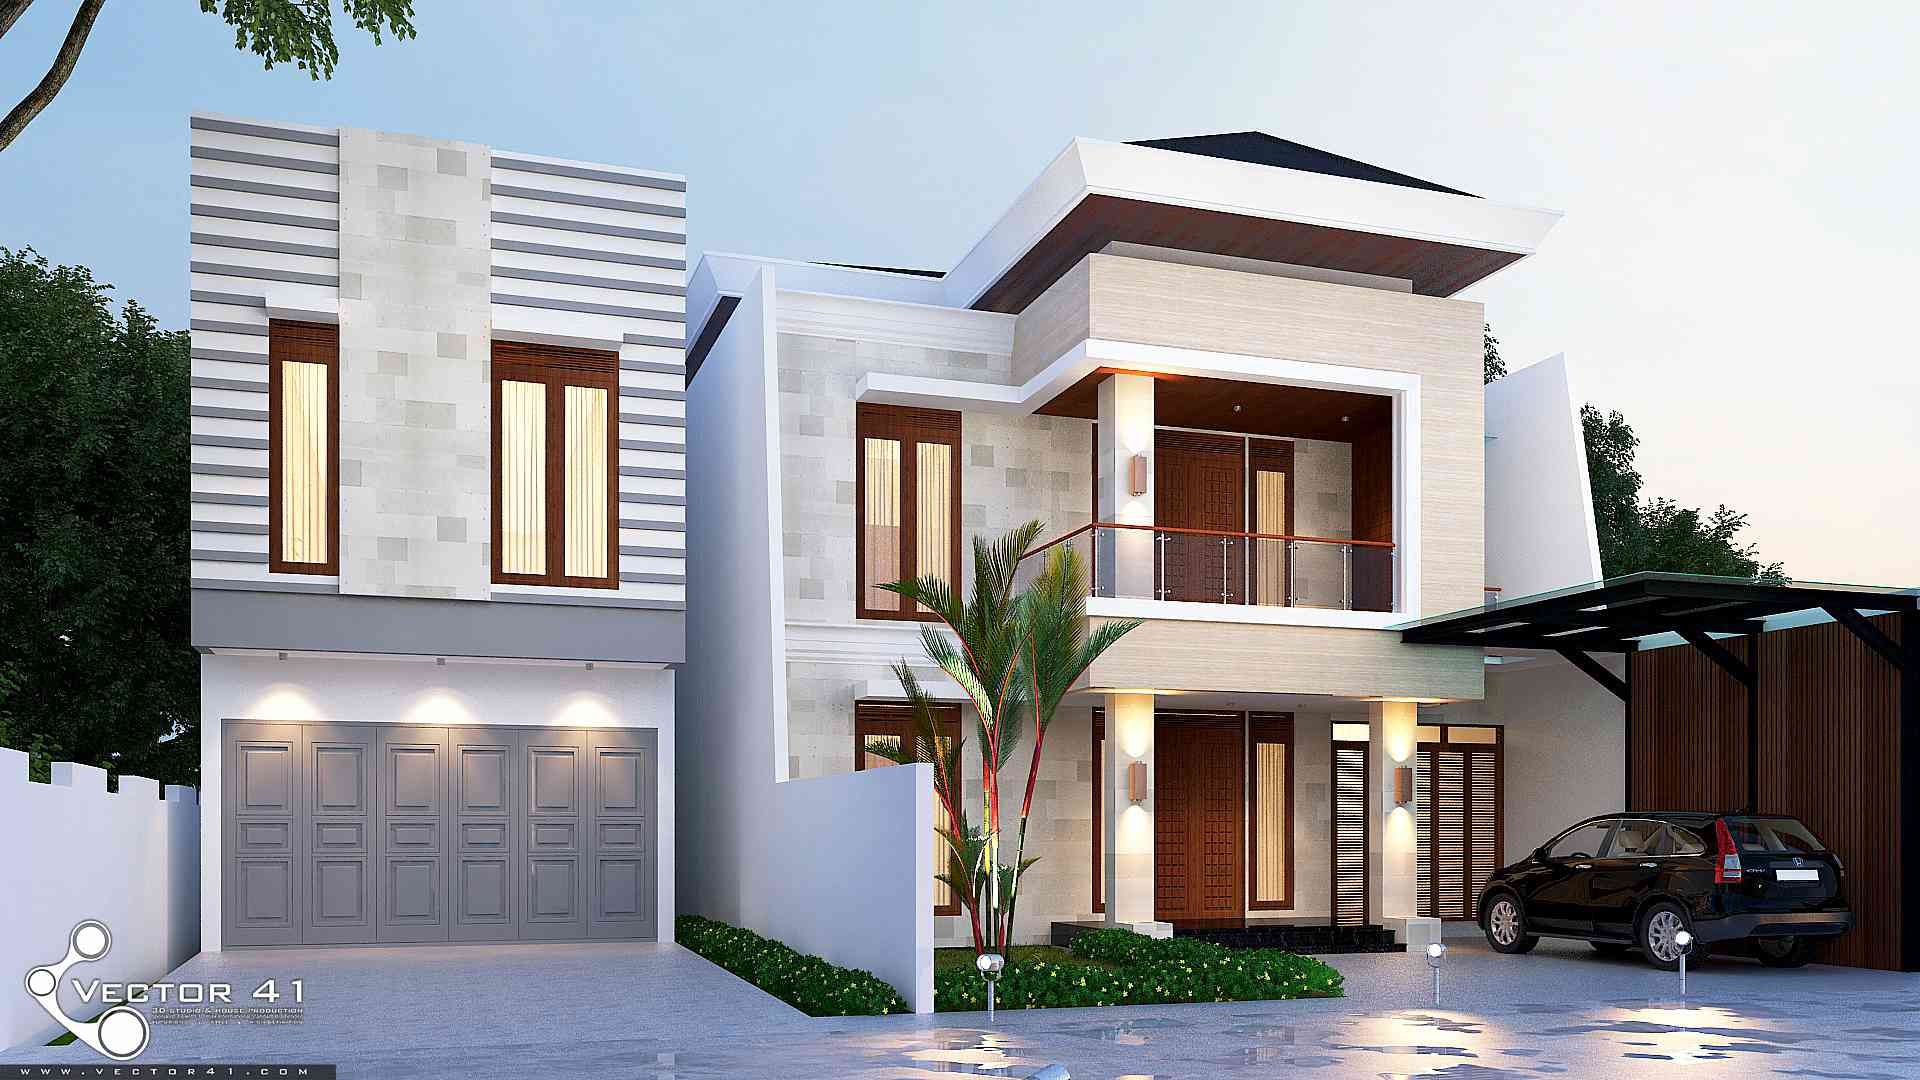 Exterior House_Medan (Mr. Andi), VECTOR41 VECTOR41 Prefabrik ev